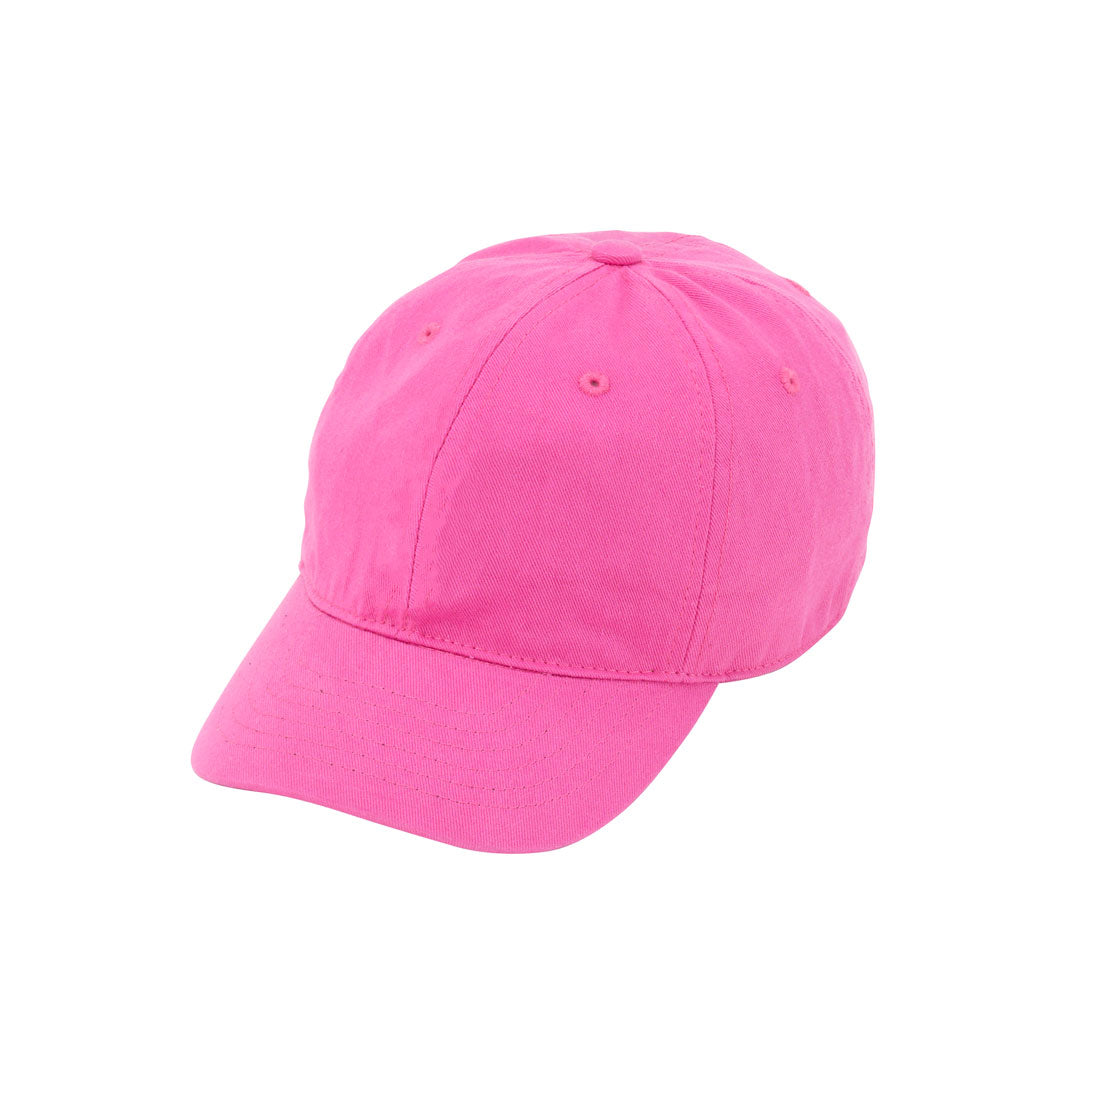 Hot Pink Kid's Baseball Cap